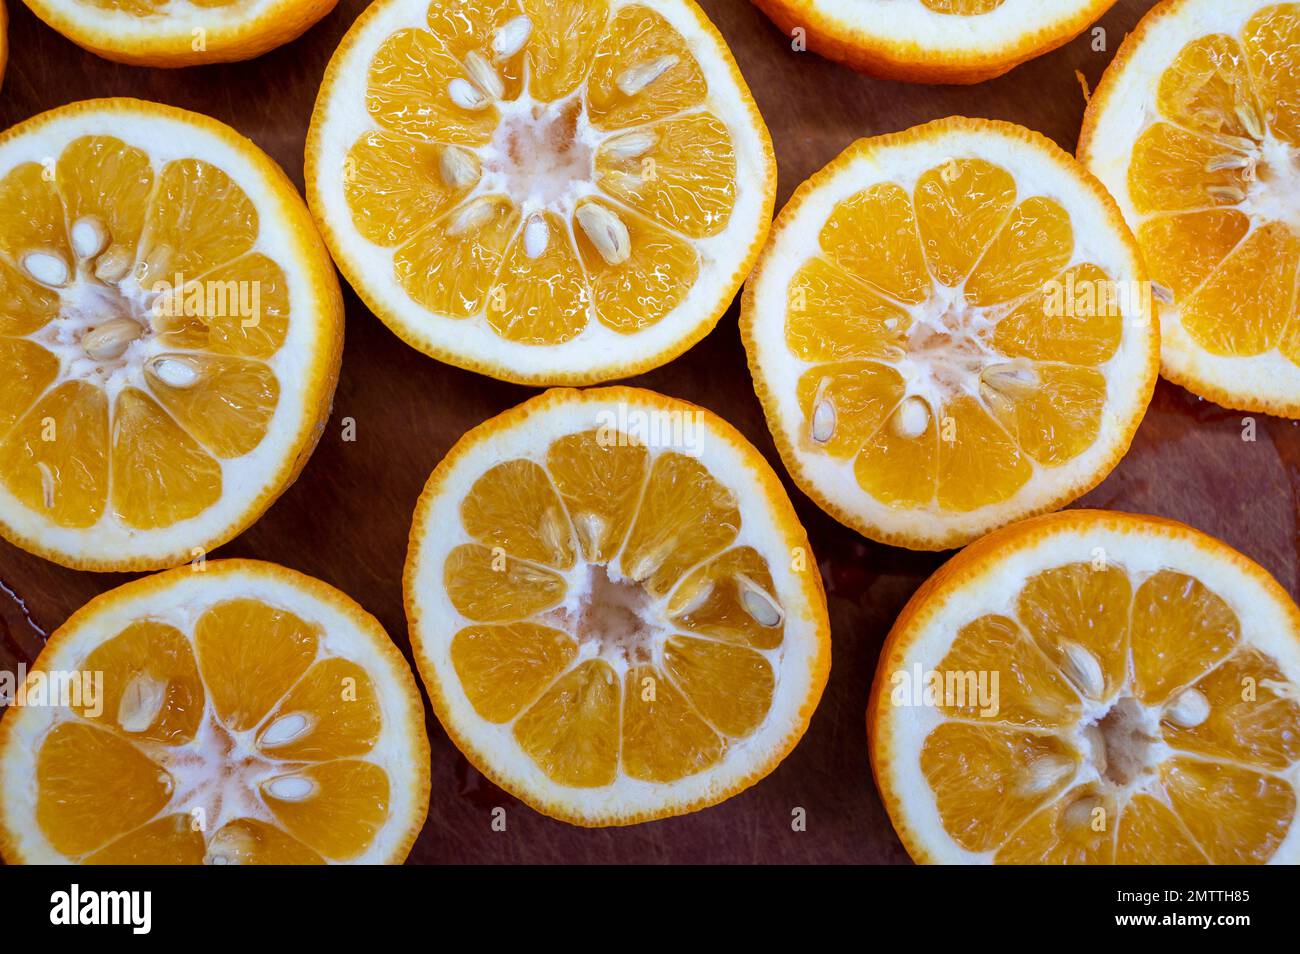 Making seville orange marmalade at home. Stock Photo